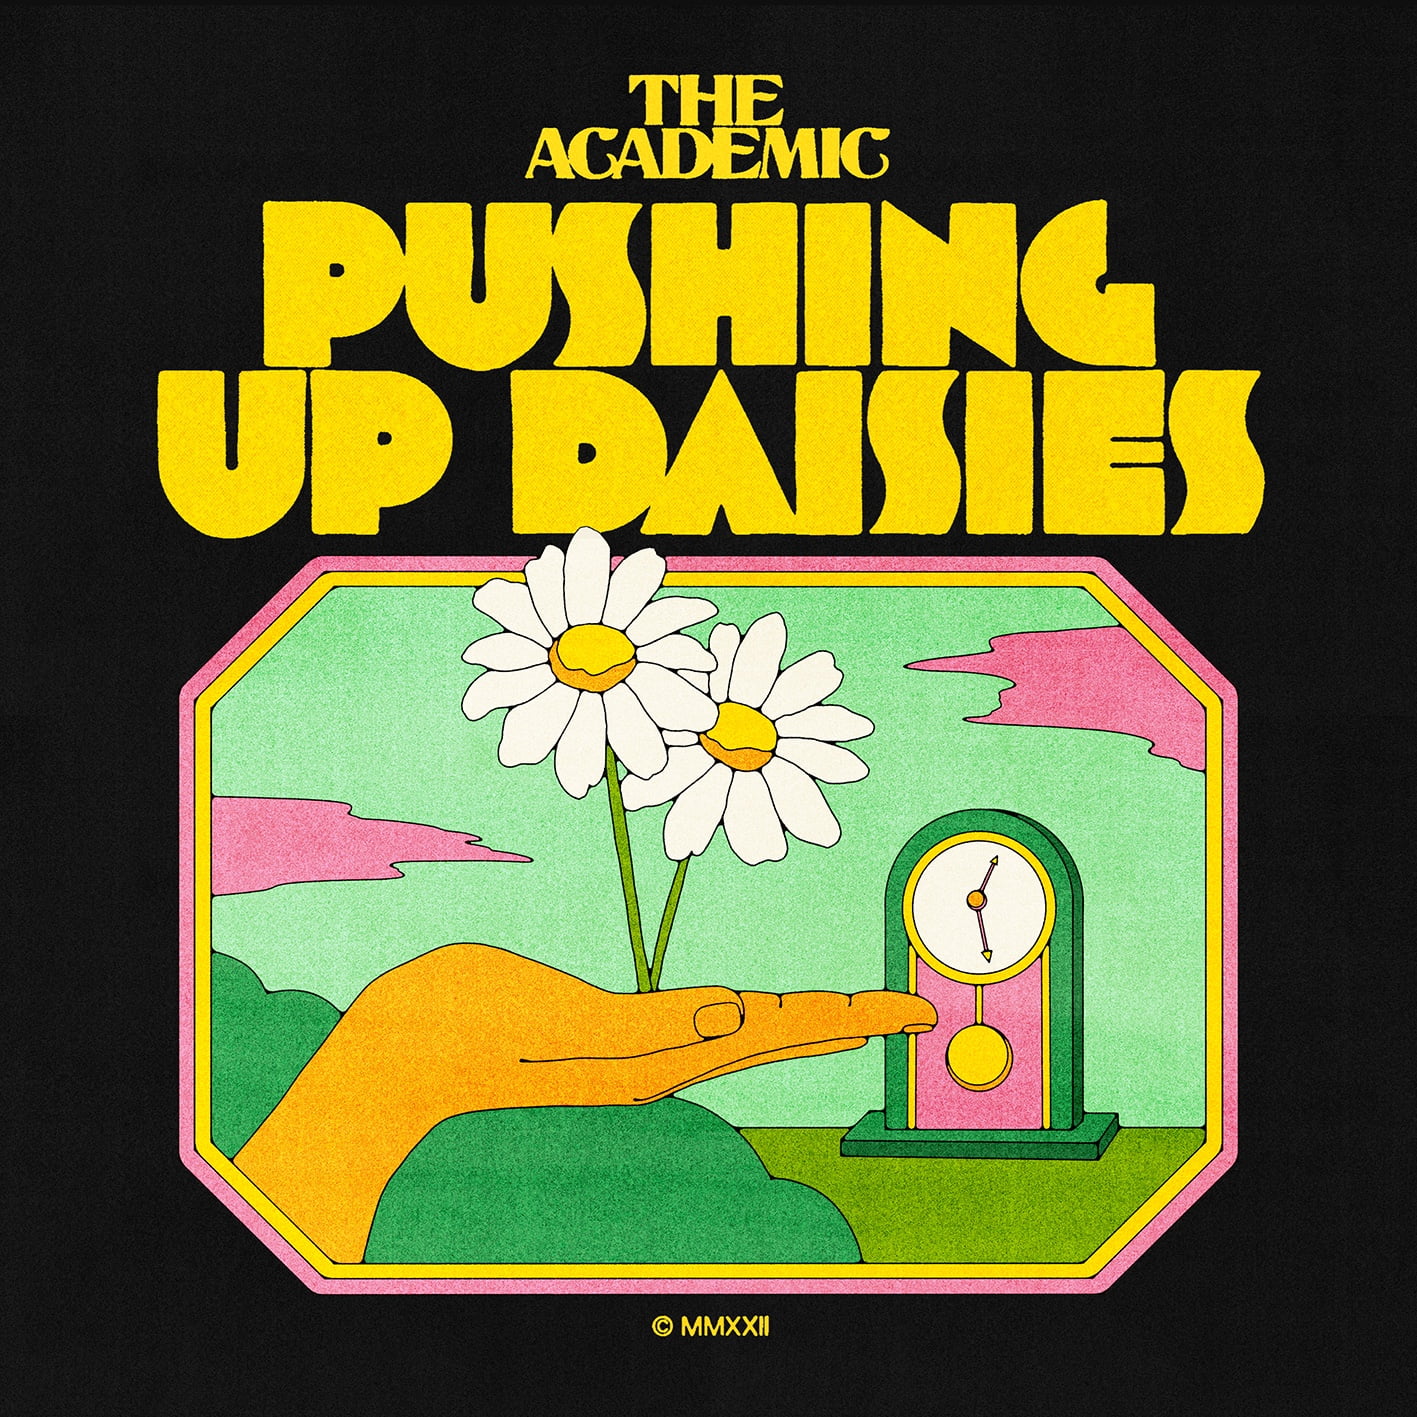 THE ACADEMIC - "Pushing Up Daisies" via 360 MAGAZINE